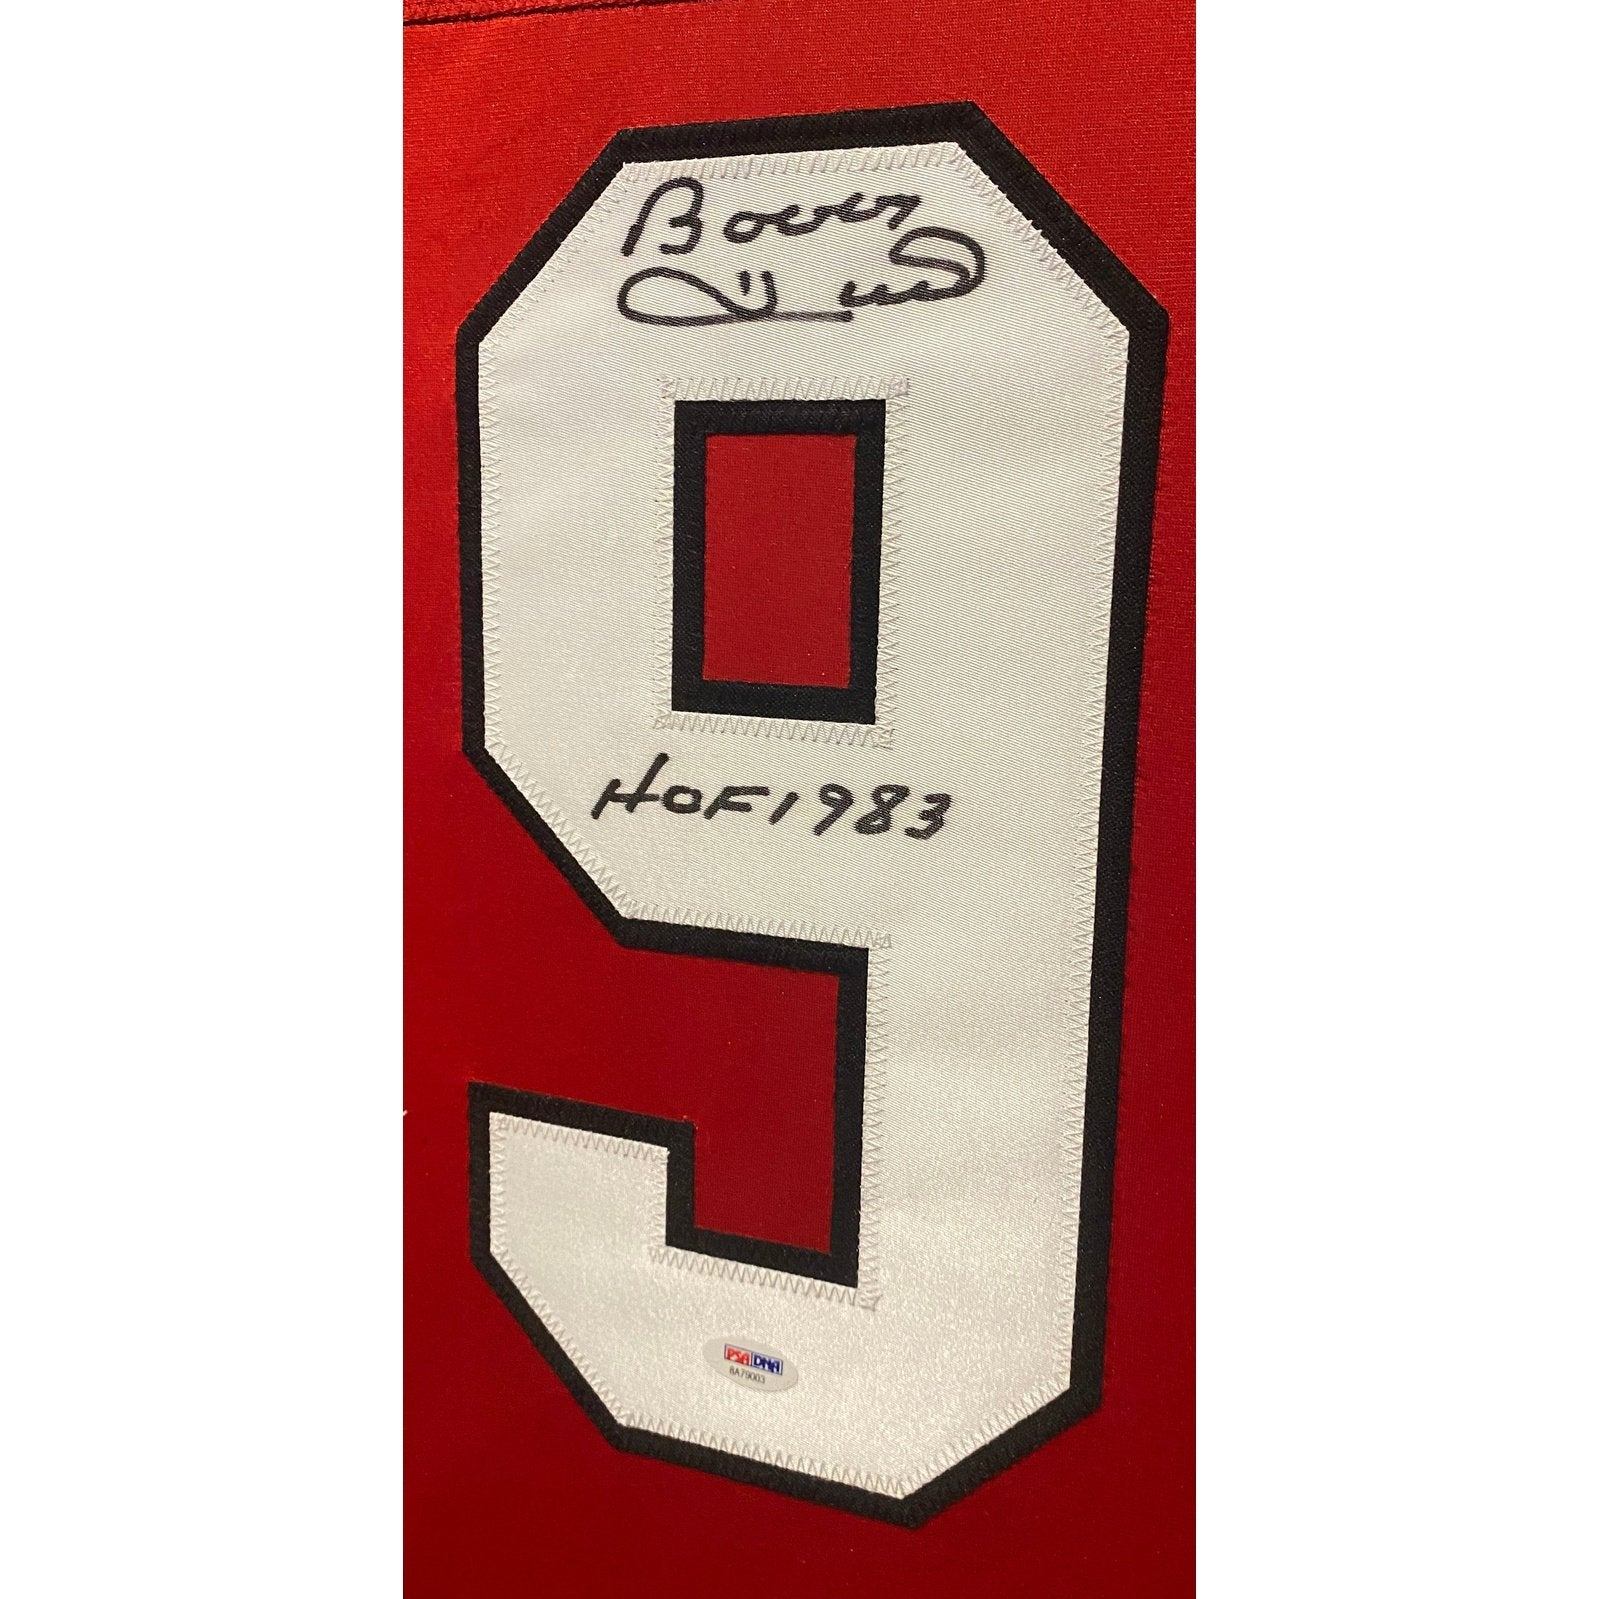 Bobby Hull Autographed Chicago Blackhawks Alternative Jersey